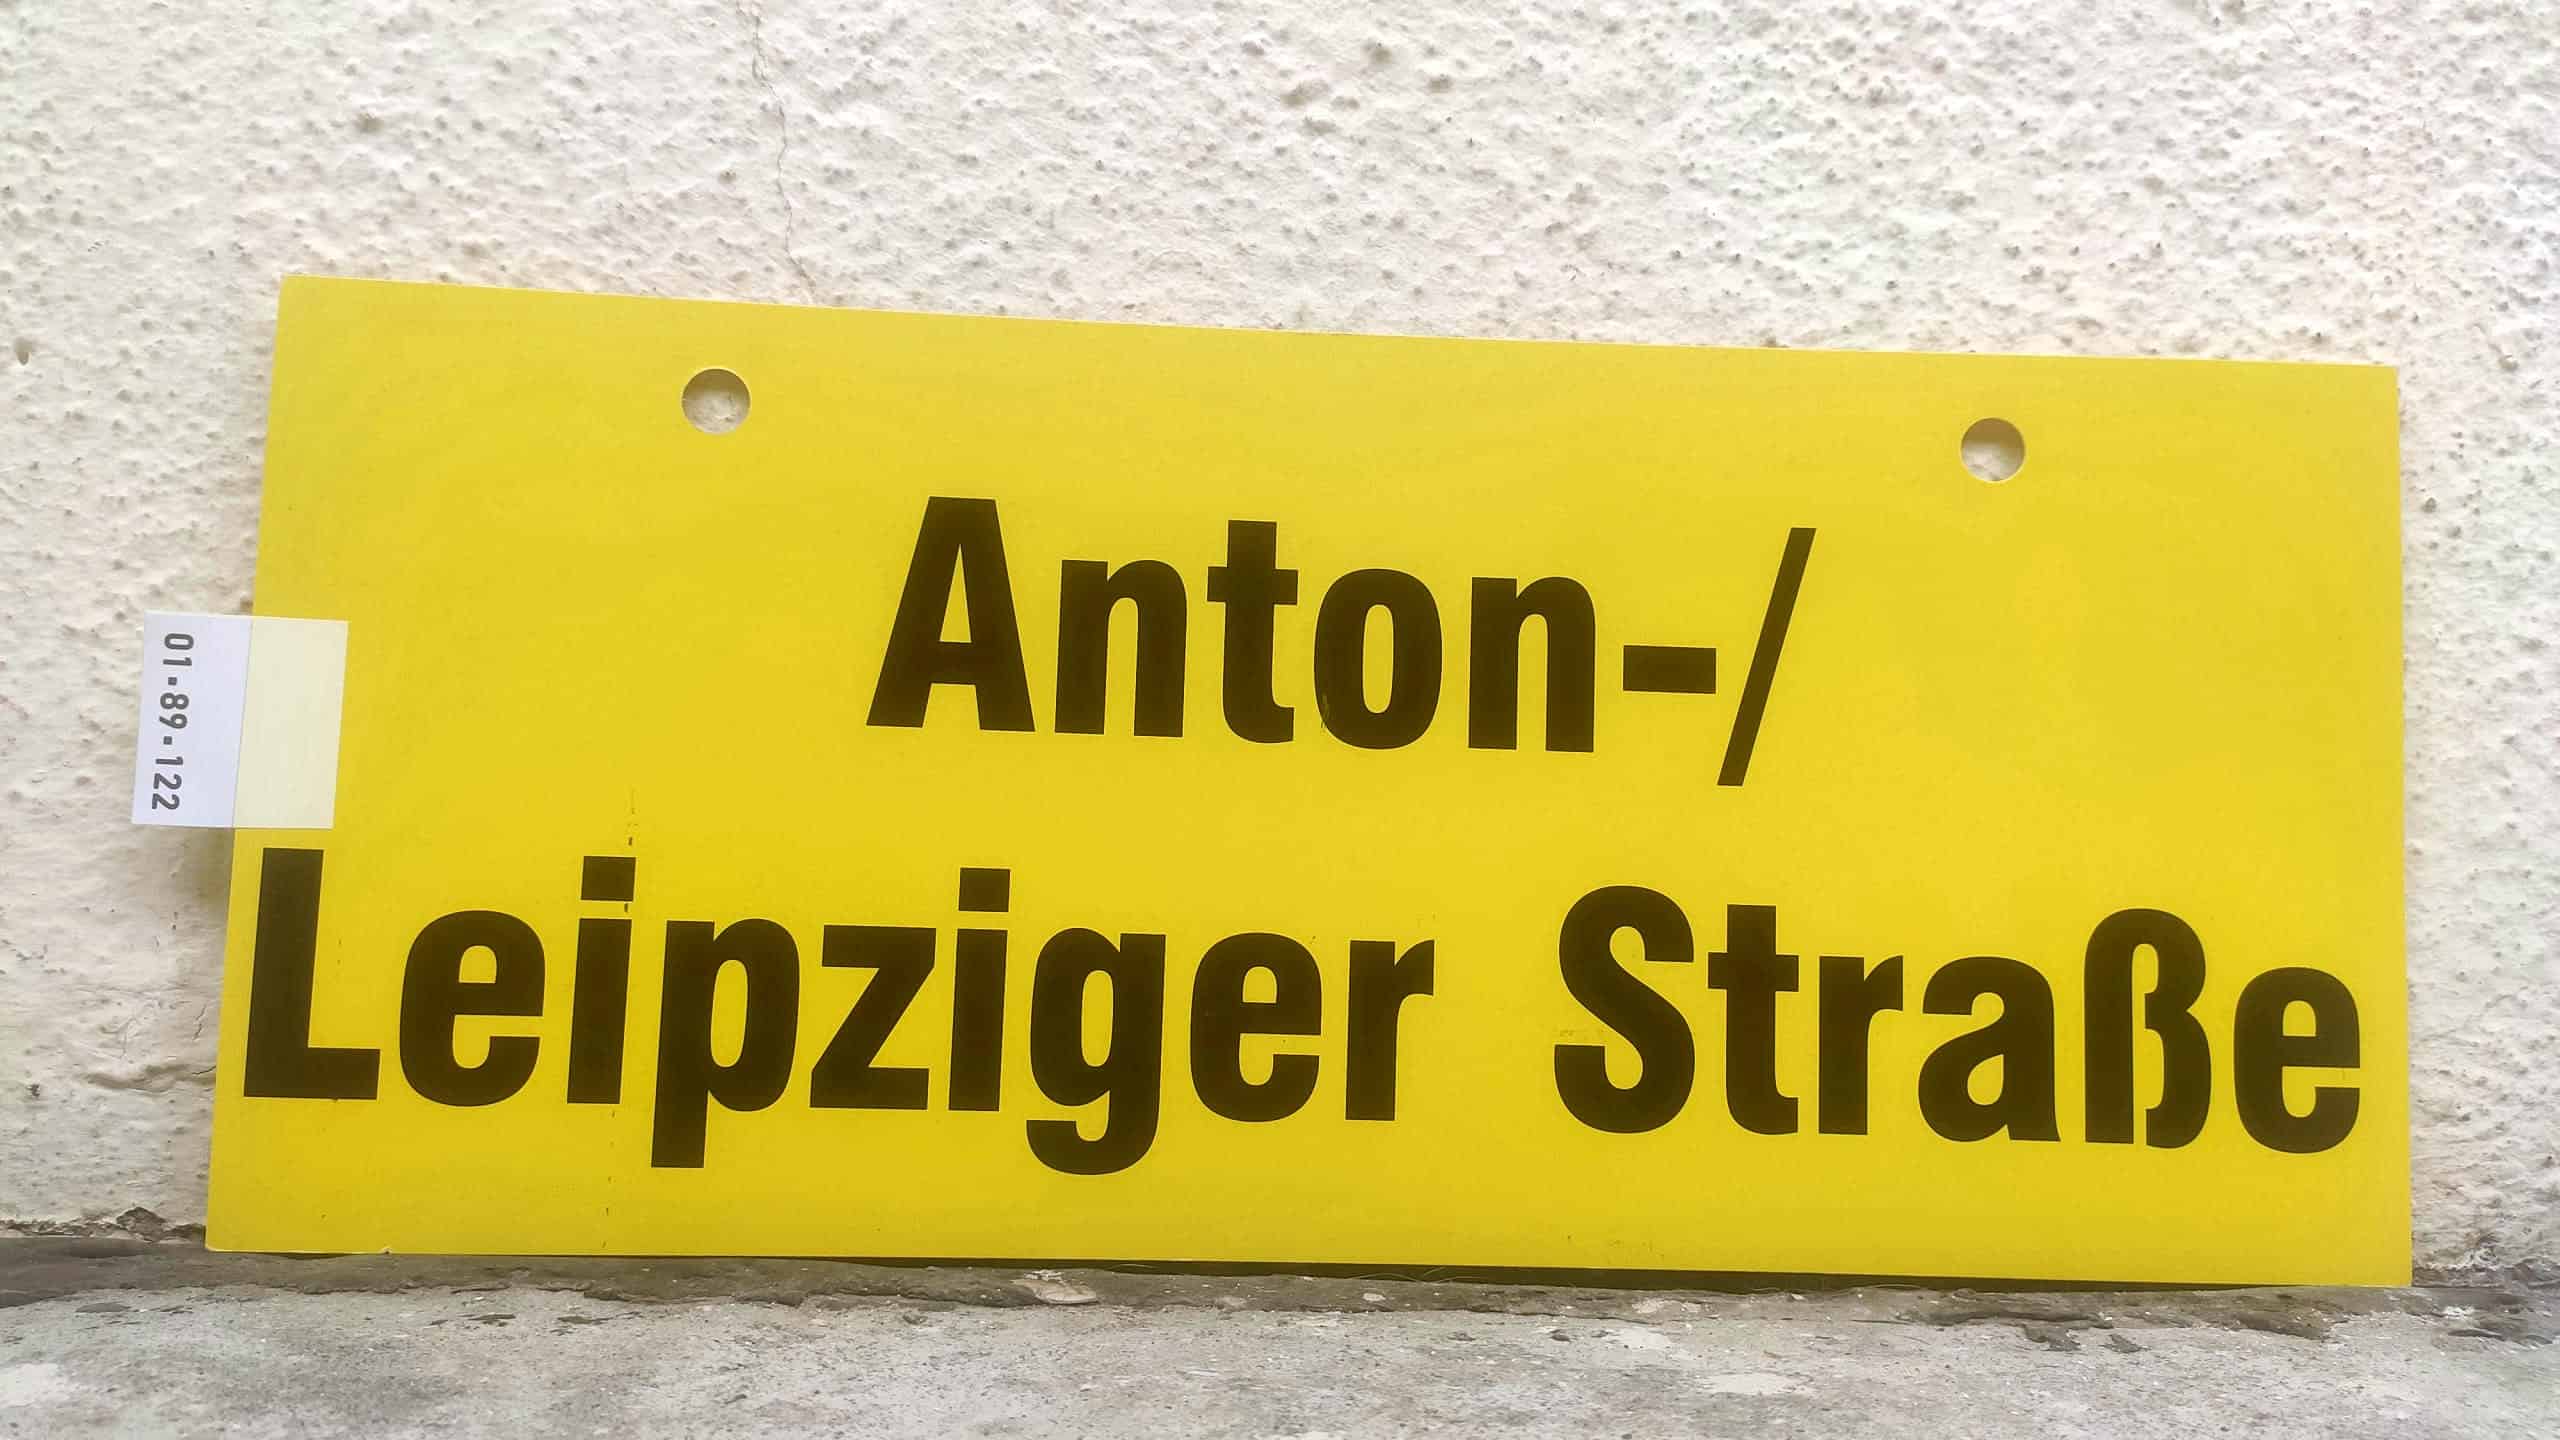 Anton-/ Leipziger Straße